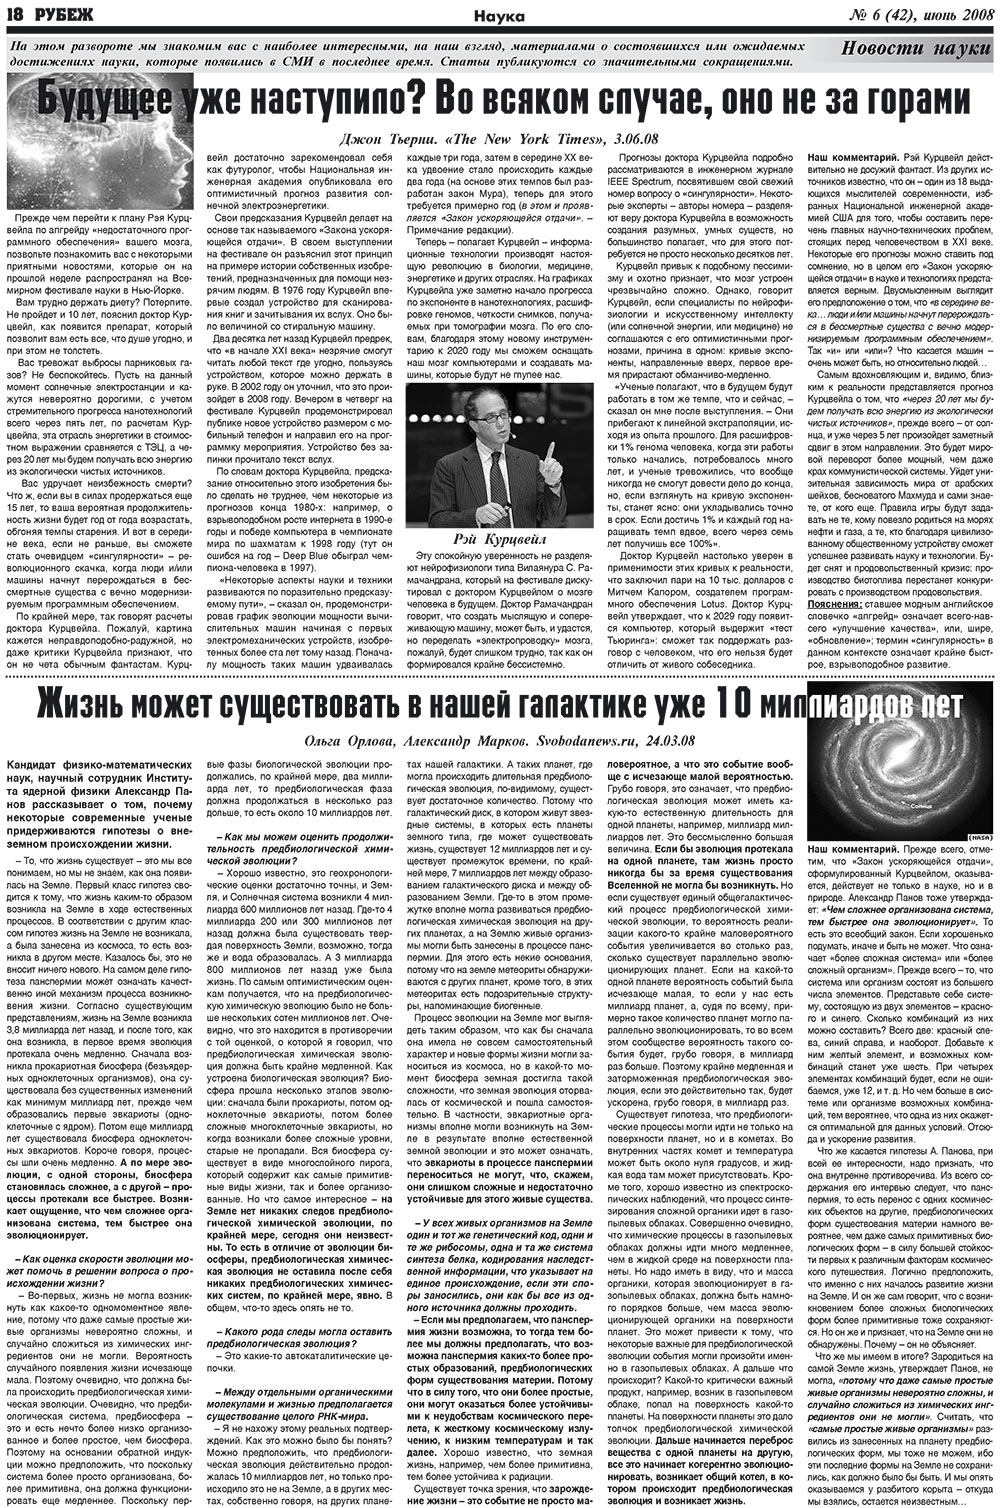 Рубеж, газета. 2008 №6 стр.18